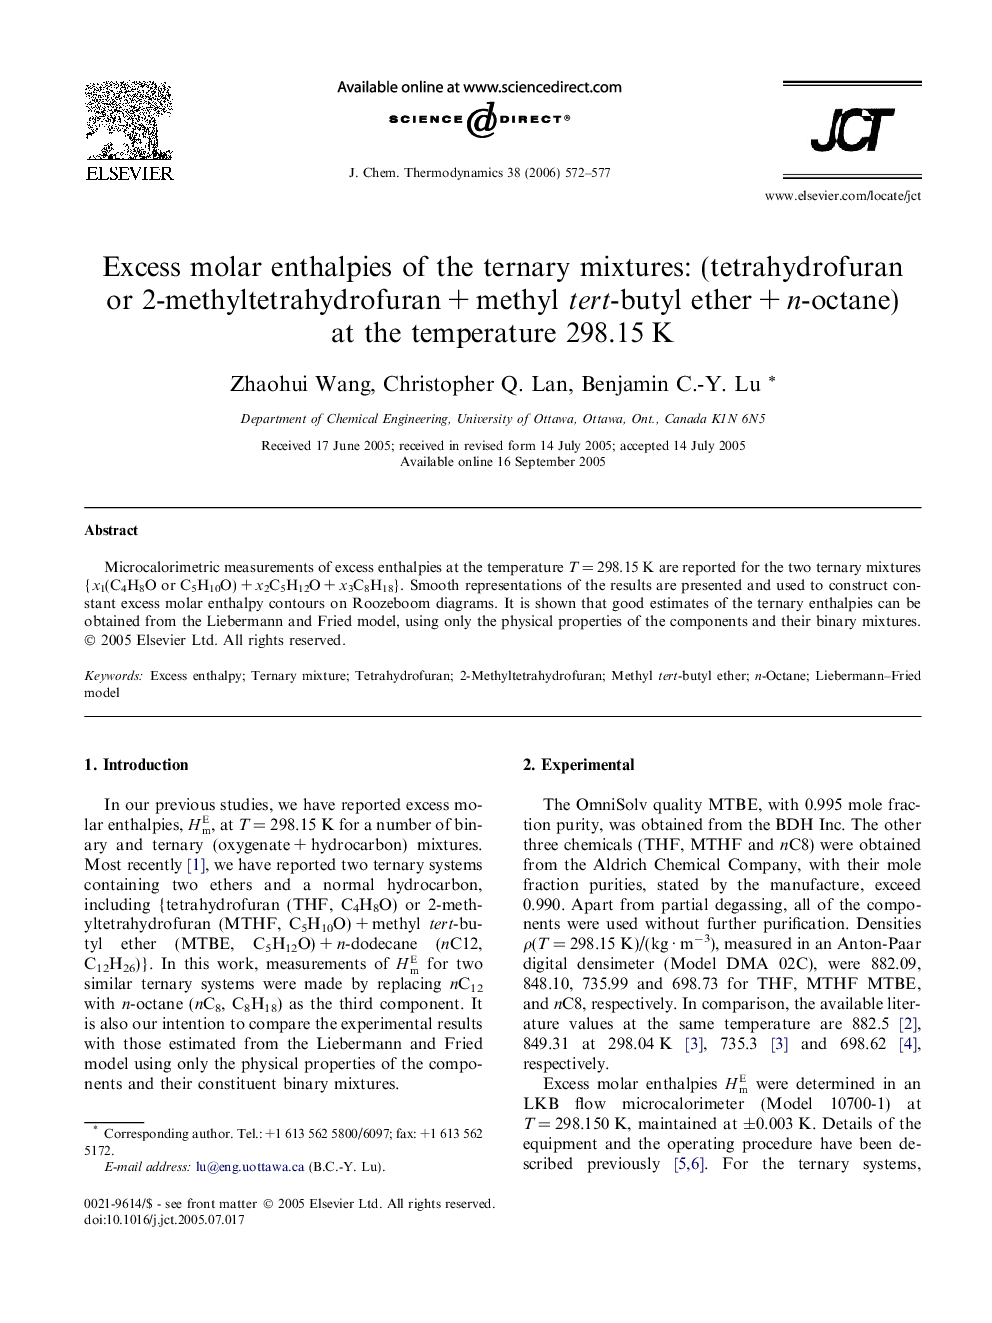 Excess molar enthalpies of the ternary mixtures: (tetrahydrofuran or 2-methyltetrahydrofuran + methyl tert-butyl ether + n-octane) at the temperature 298.15 K